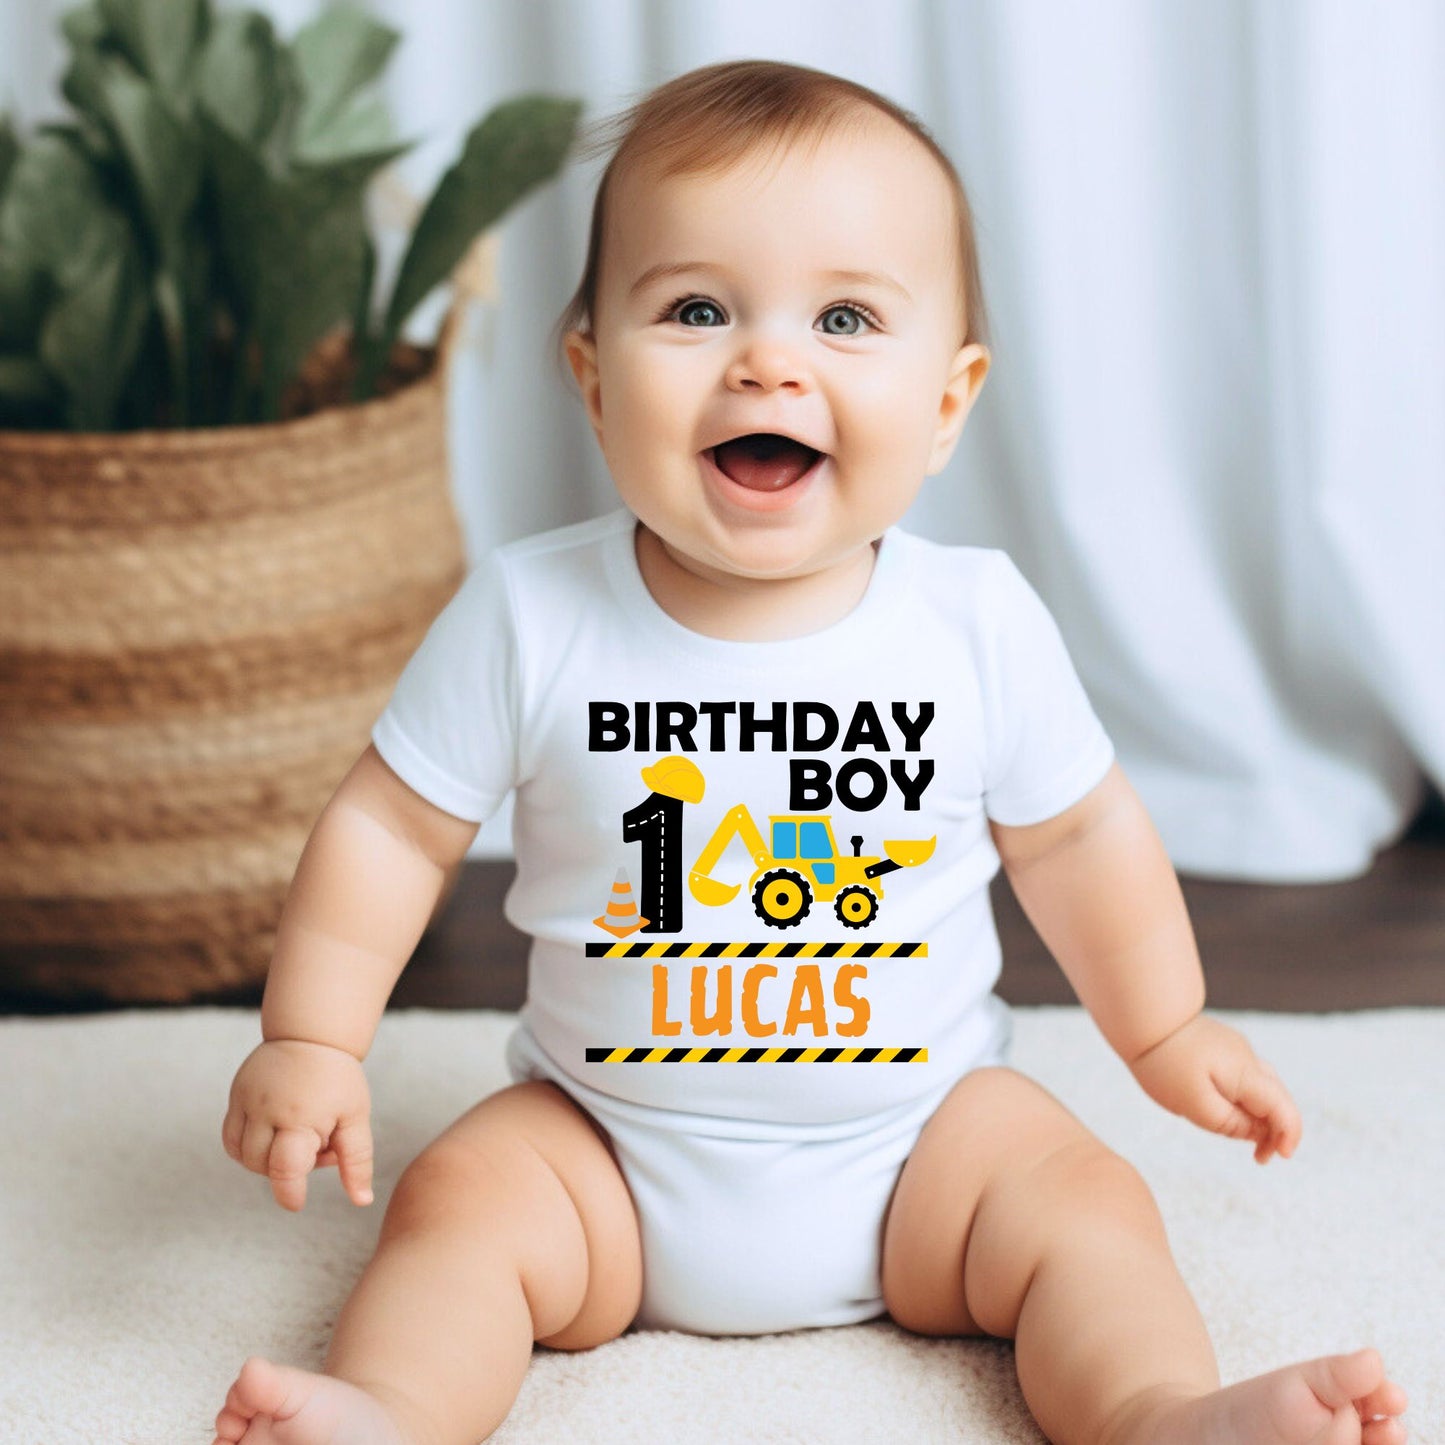 Personalized "Birthday Boy" Baby Romper / Baby Tees: Bulldoze into Fun!"